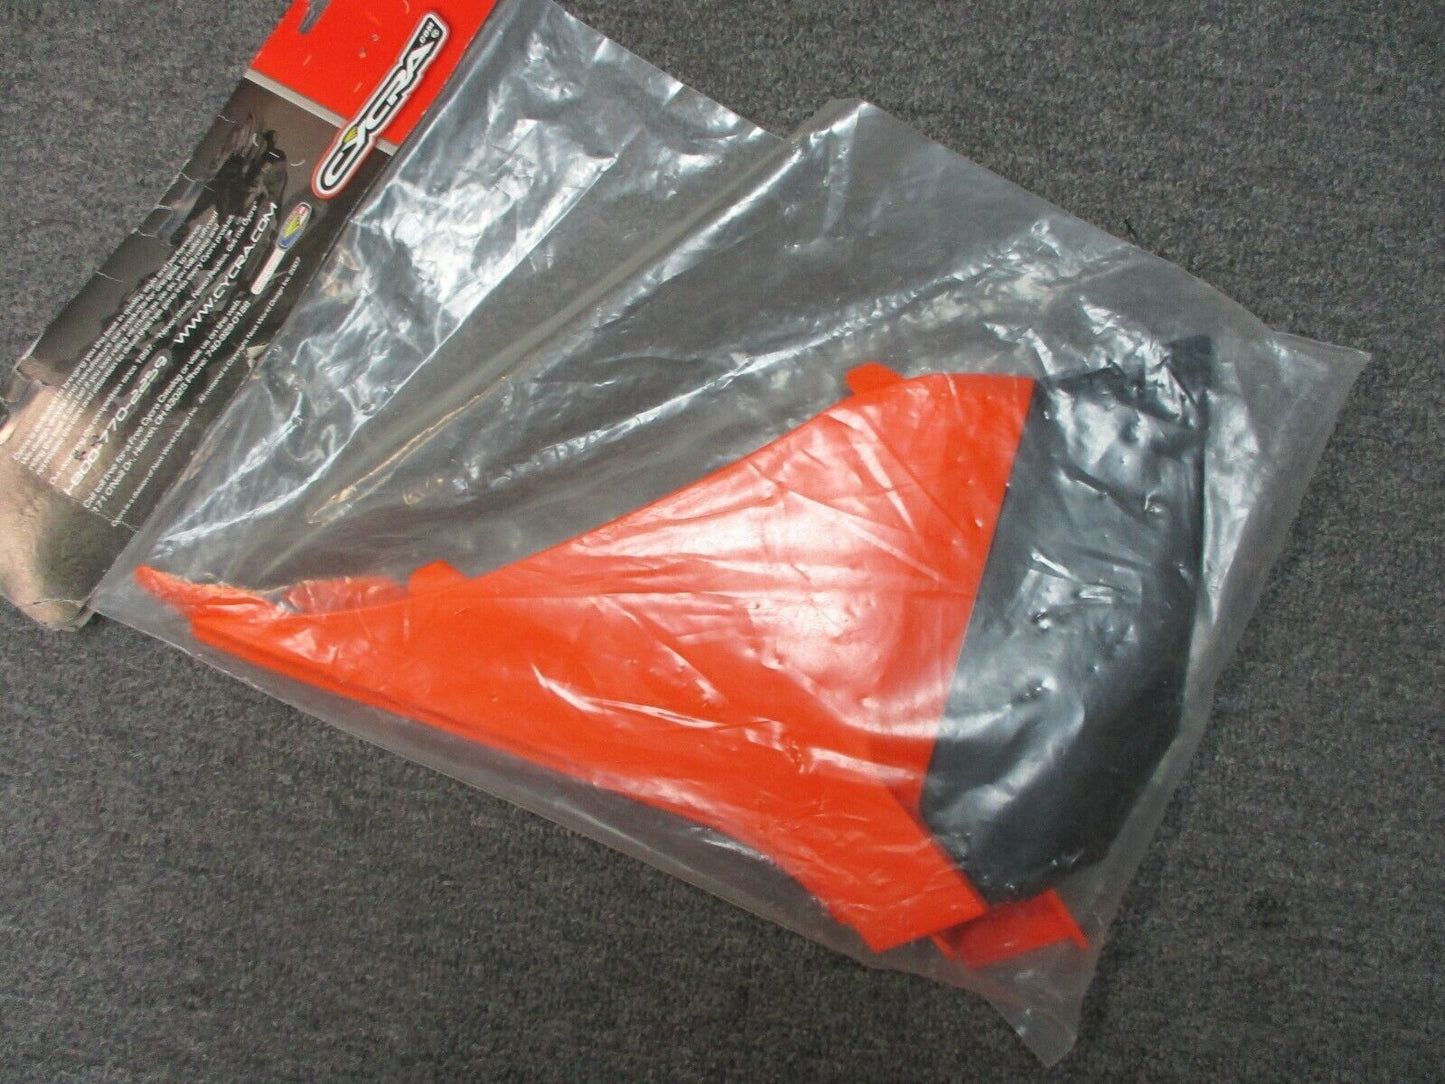 KTM 2011-2012 Orange Air Box Covers By CYCRA 1898-22